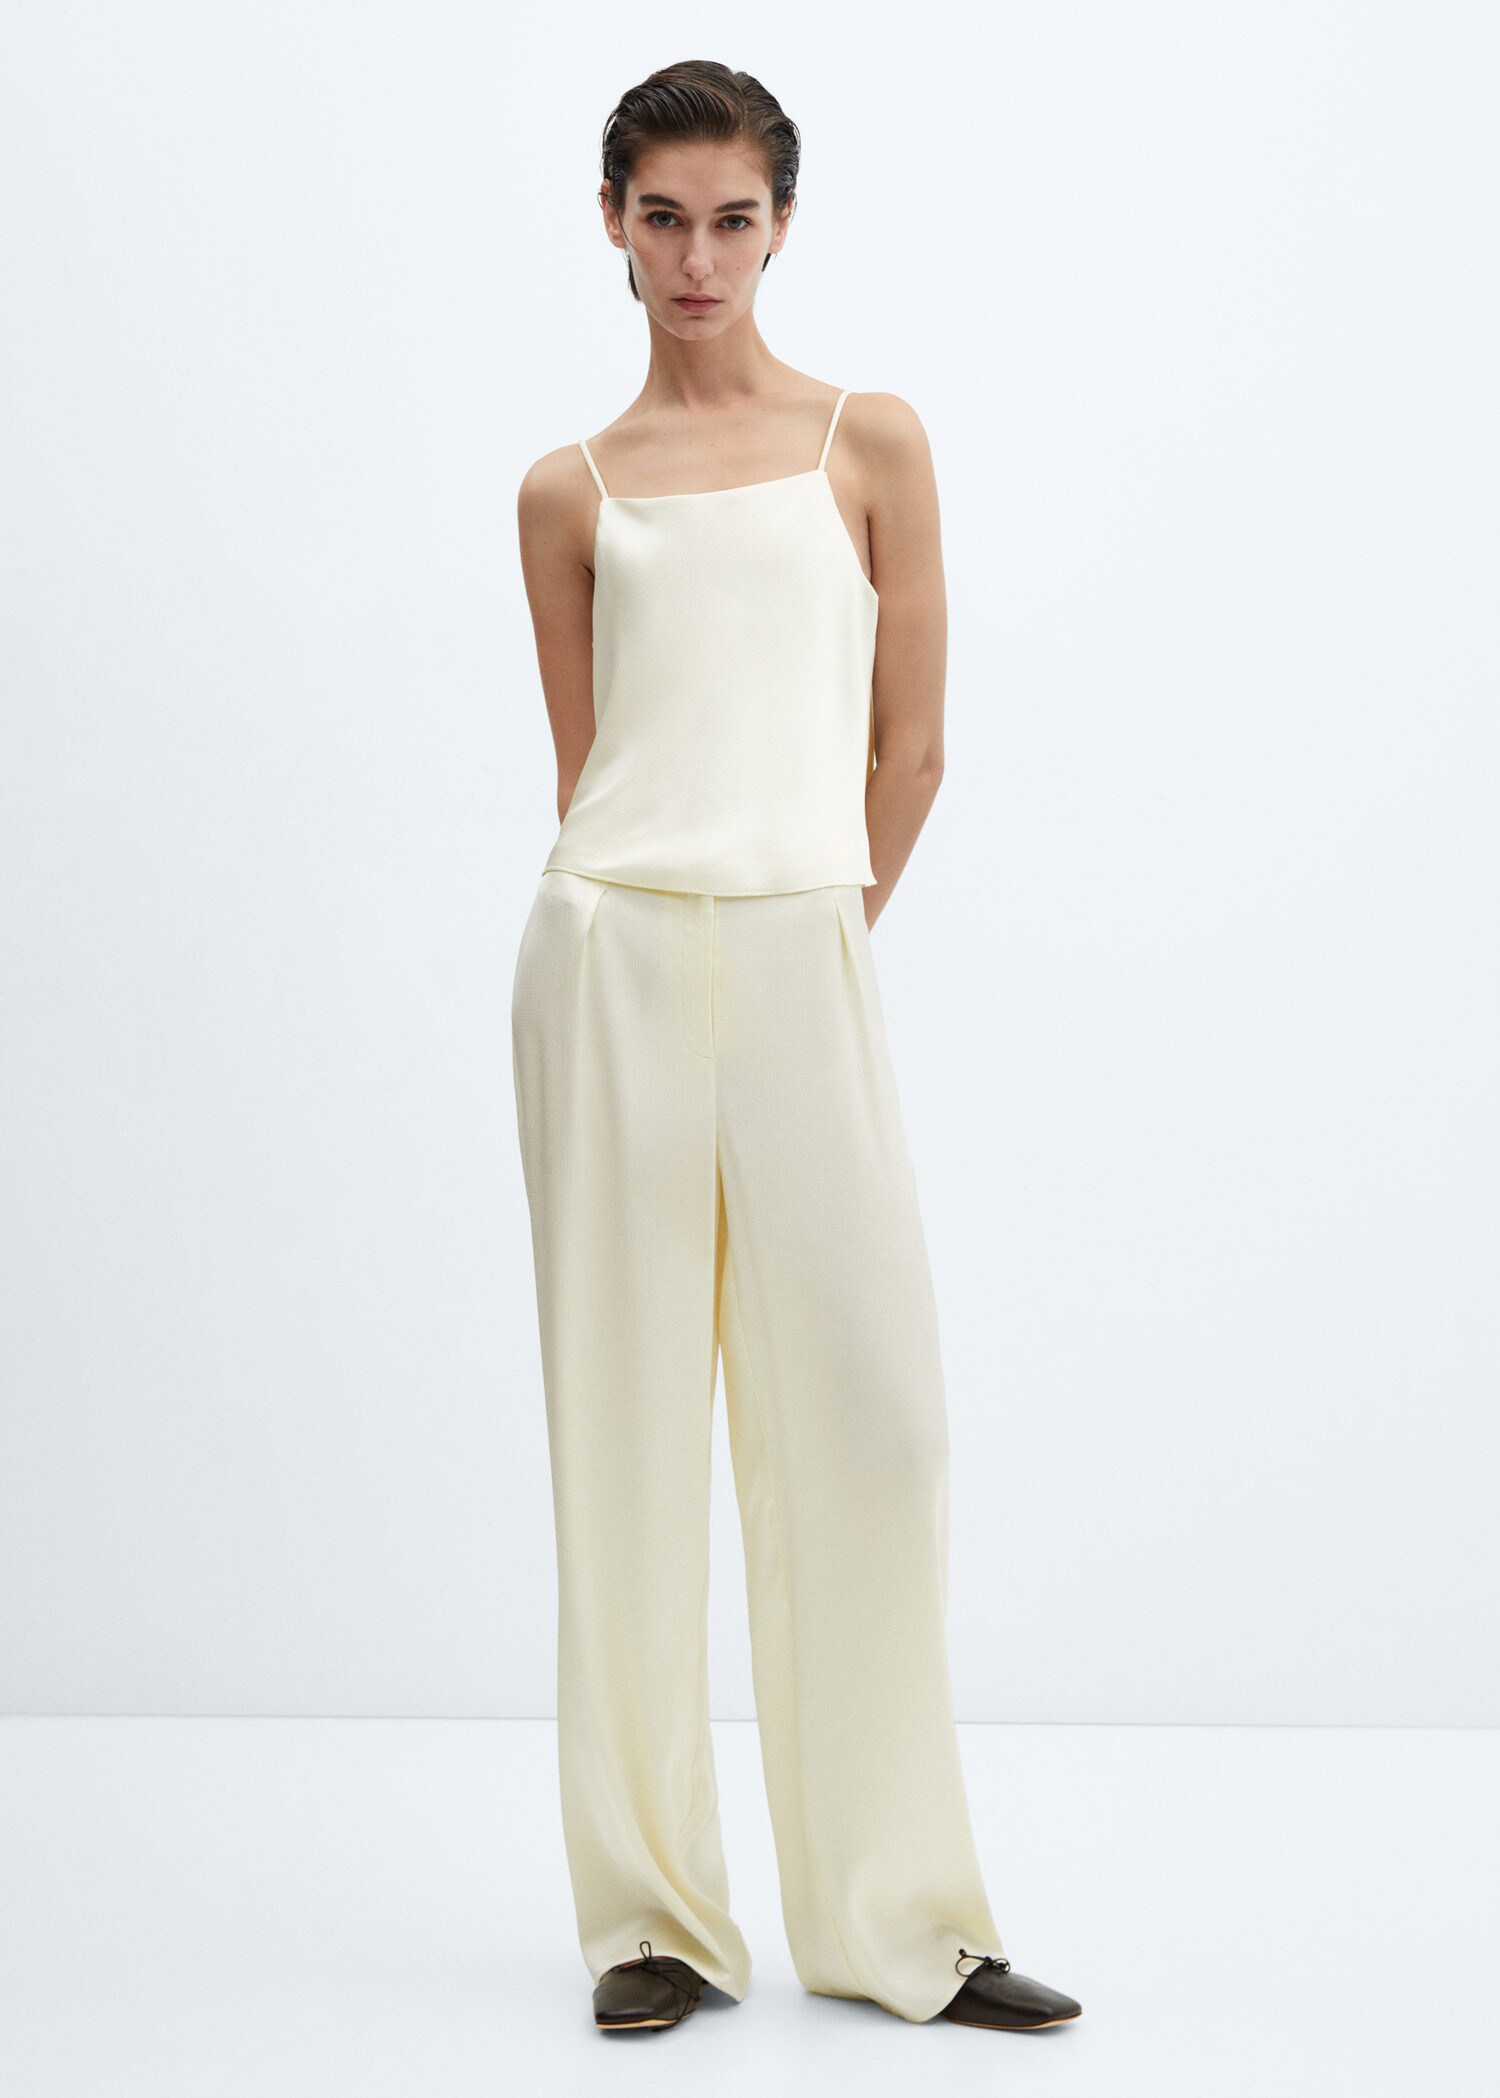 NWT Mango Women's Palazzo Flower print trouser pants Medium | eBay